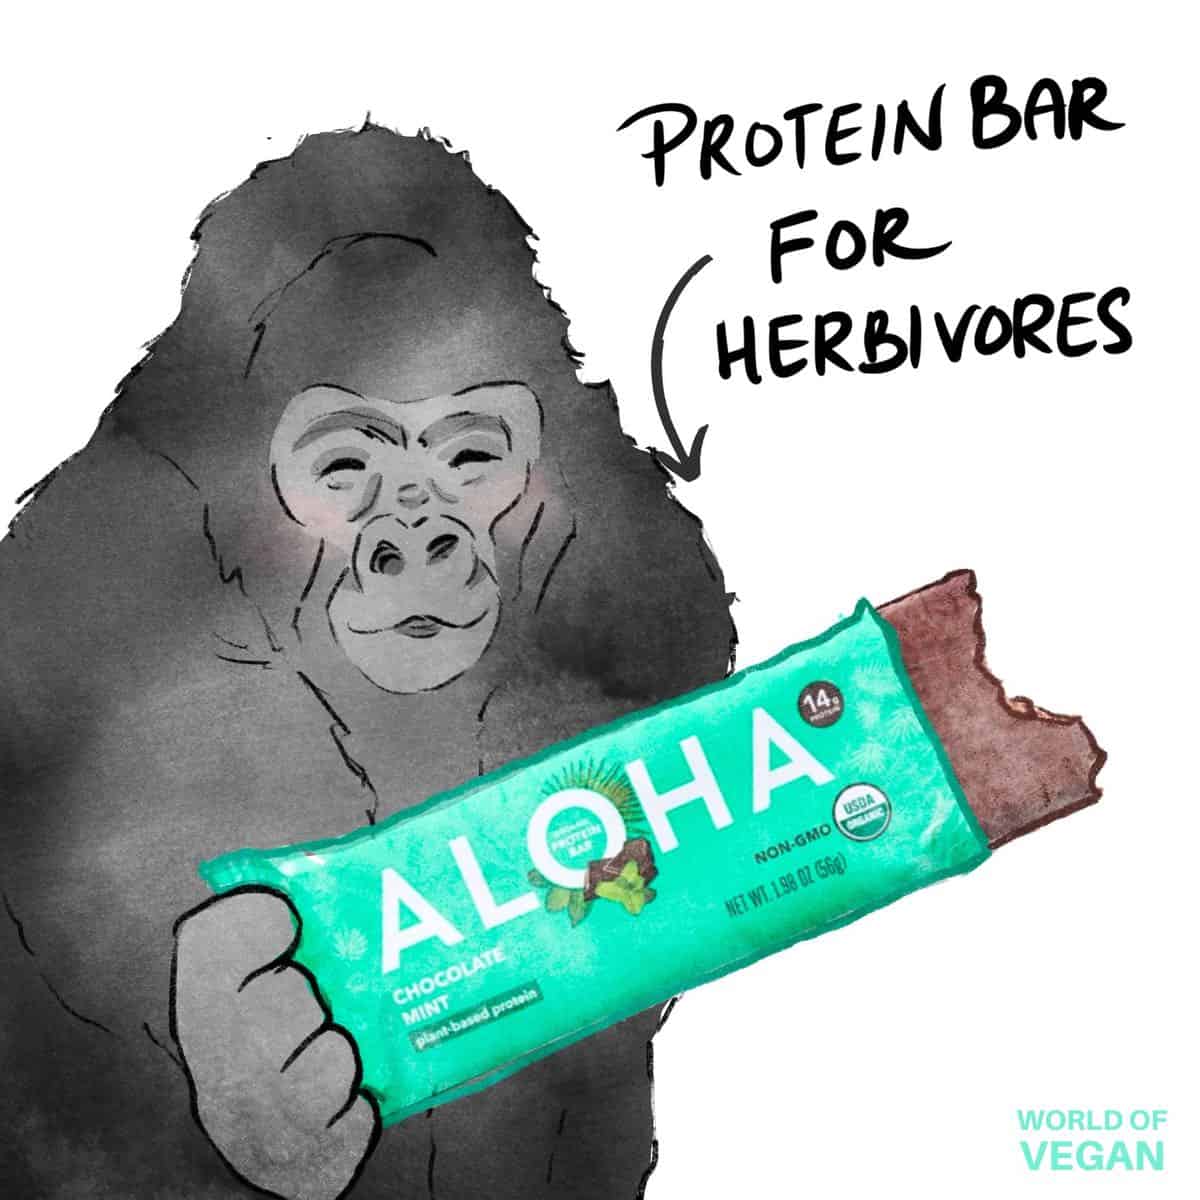 Vegan art showing a big strong gorilla holding out an Aloha protein bar.